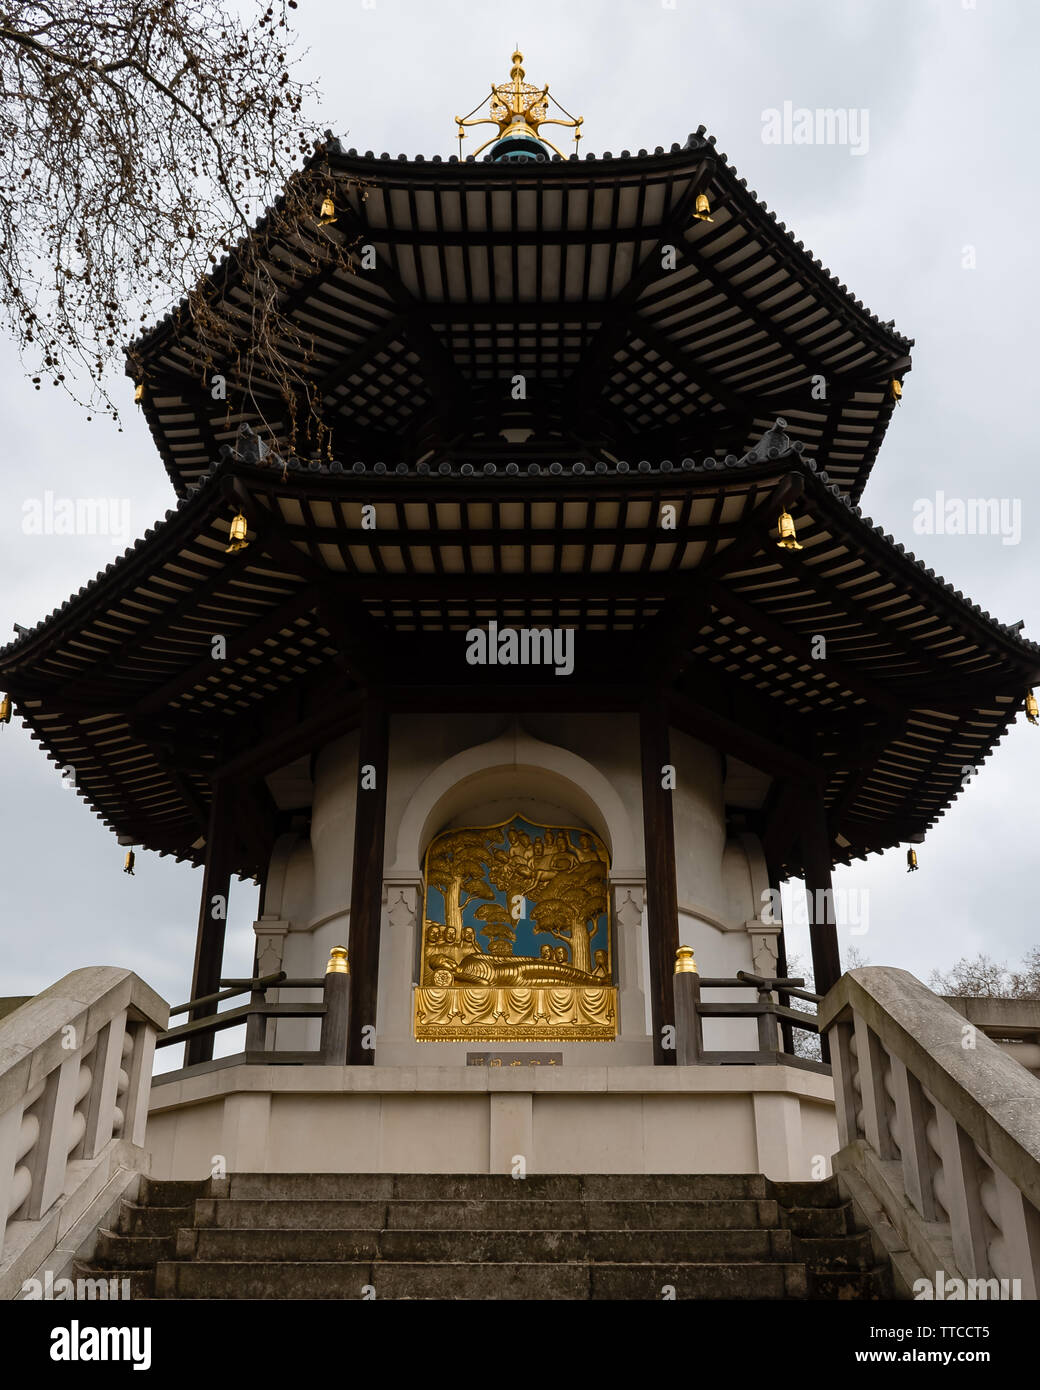 London - The London Peace Pagoda, Battersea Park - March 20, 2019 Stock Photo